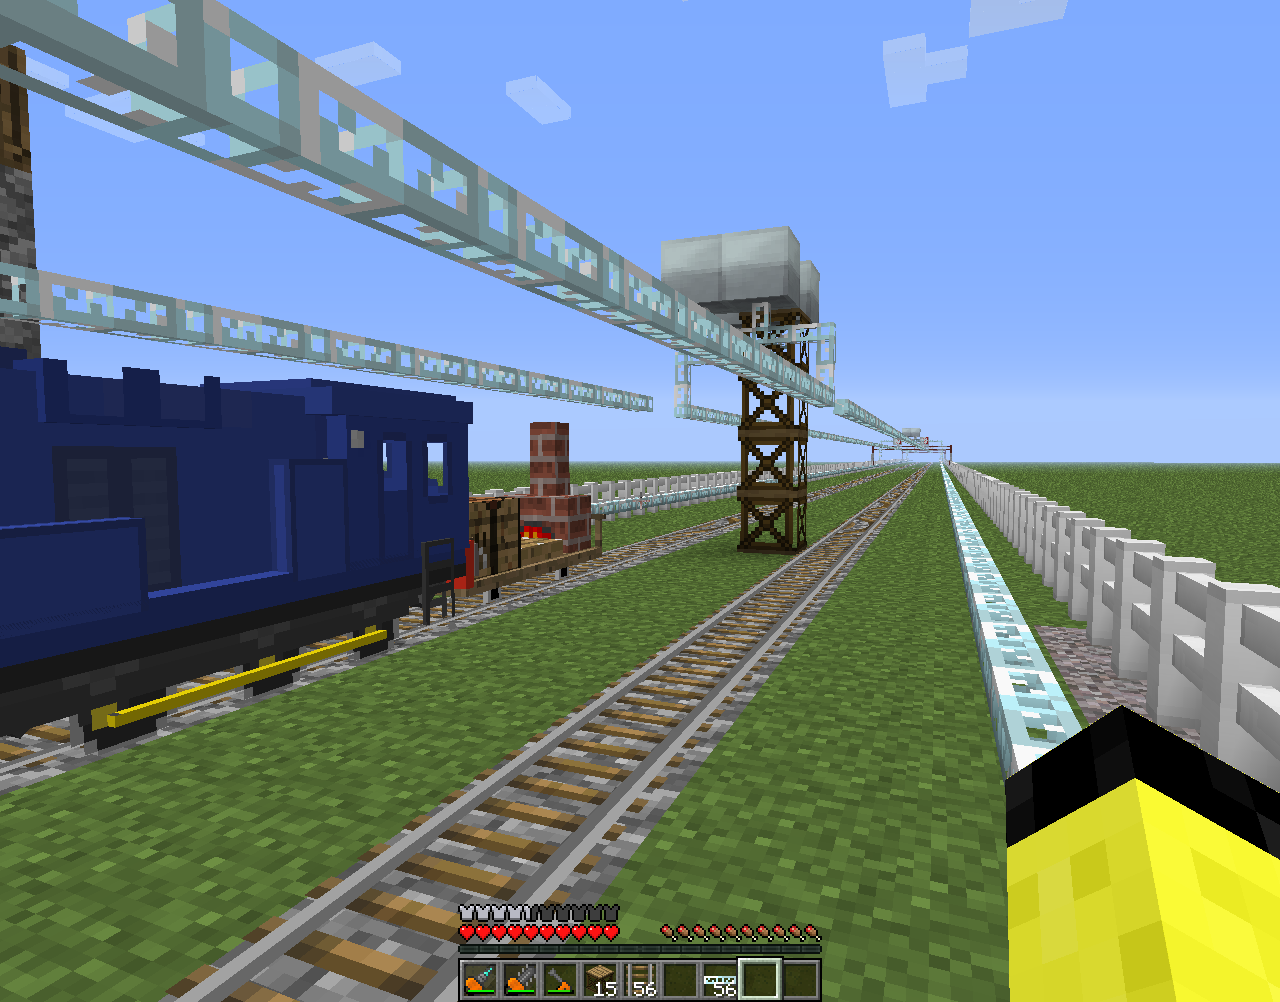 Поезд в майнкрафте на телефон. Traincraft 1.12.2. Real Train Mod 1.7.10 РЖД. Train Craft Mod 1.12.2. Immersive railroading контактная сеть.